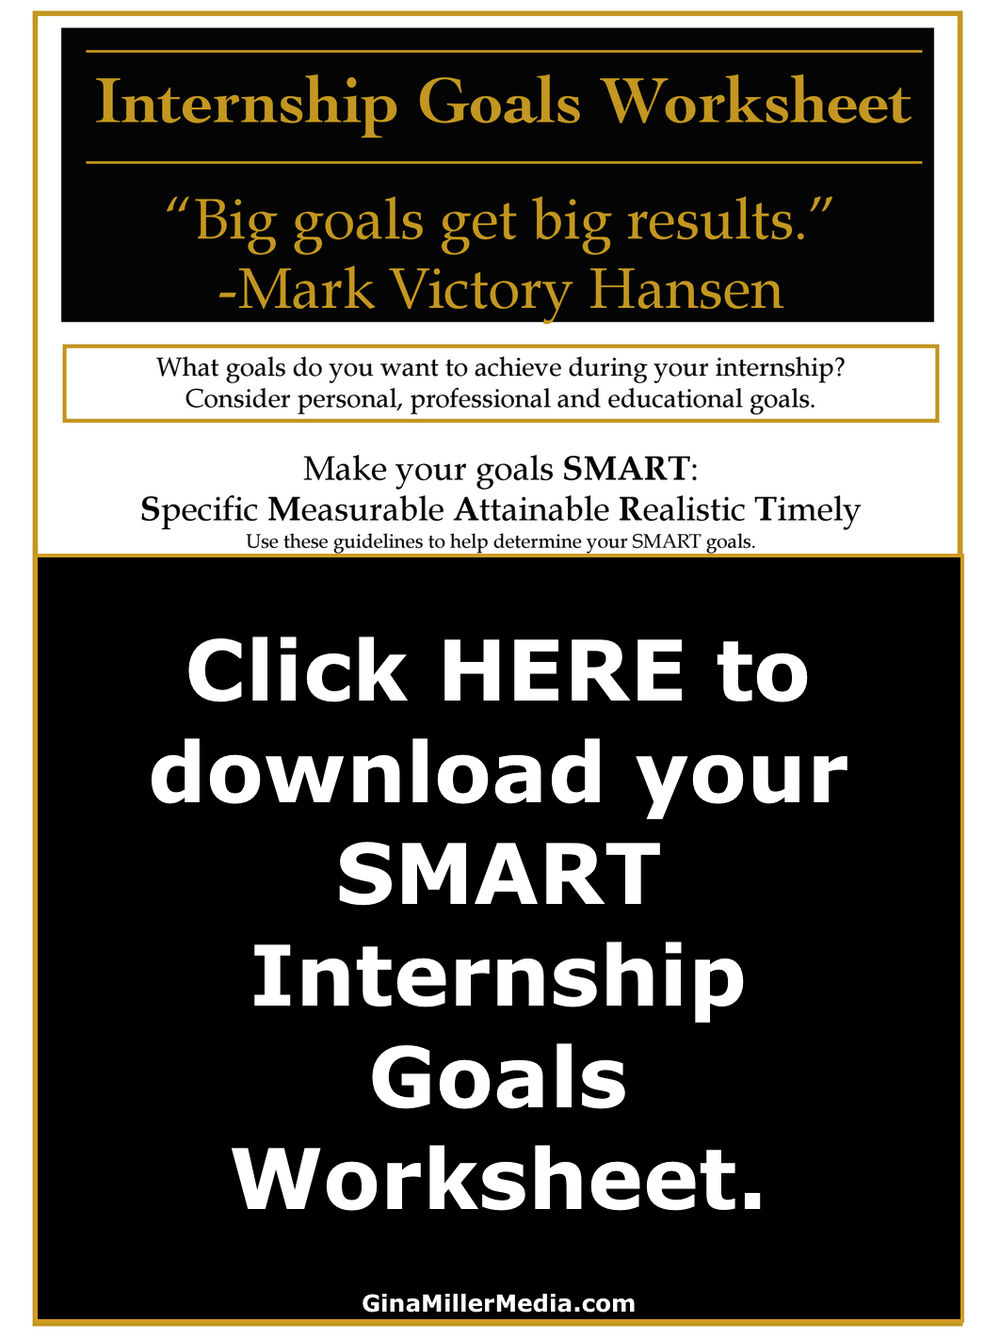 Importance of internship goals worksheet, internship goals worksheet, SMART goals for your internship